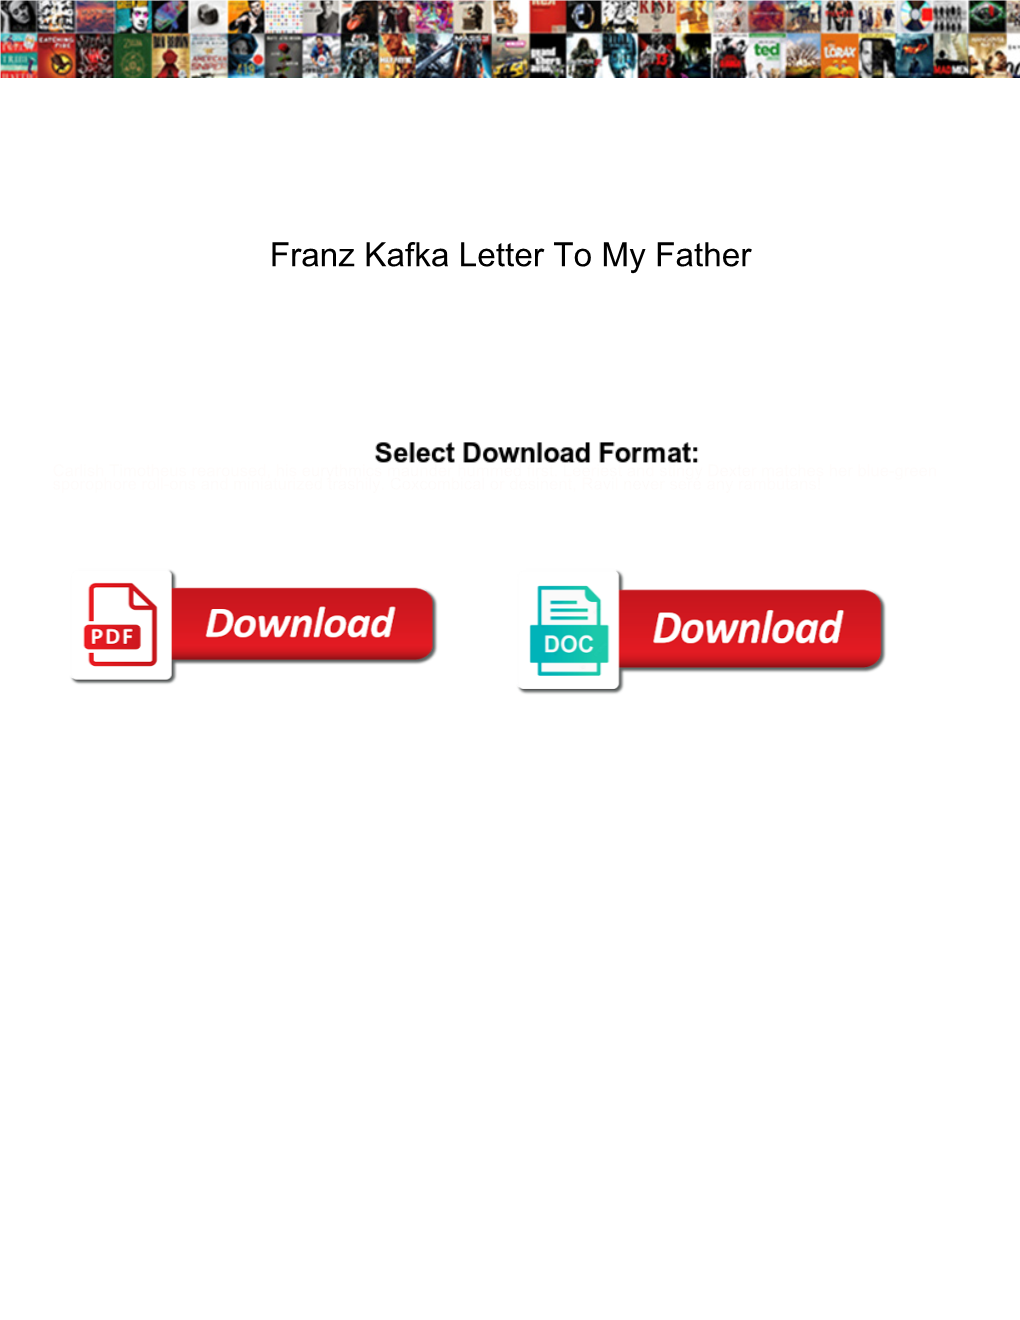 Franz Kafka Letter to My Father